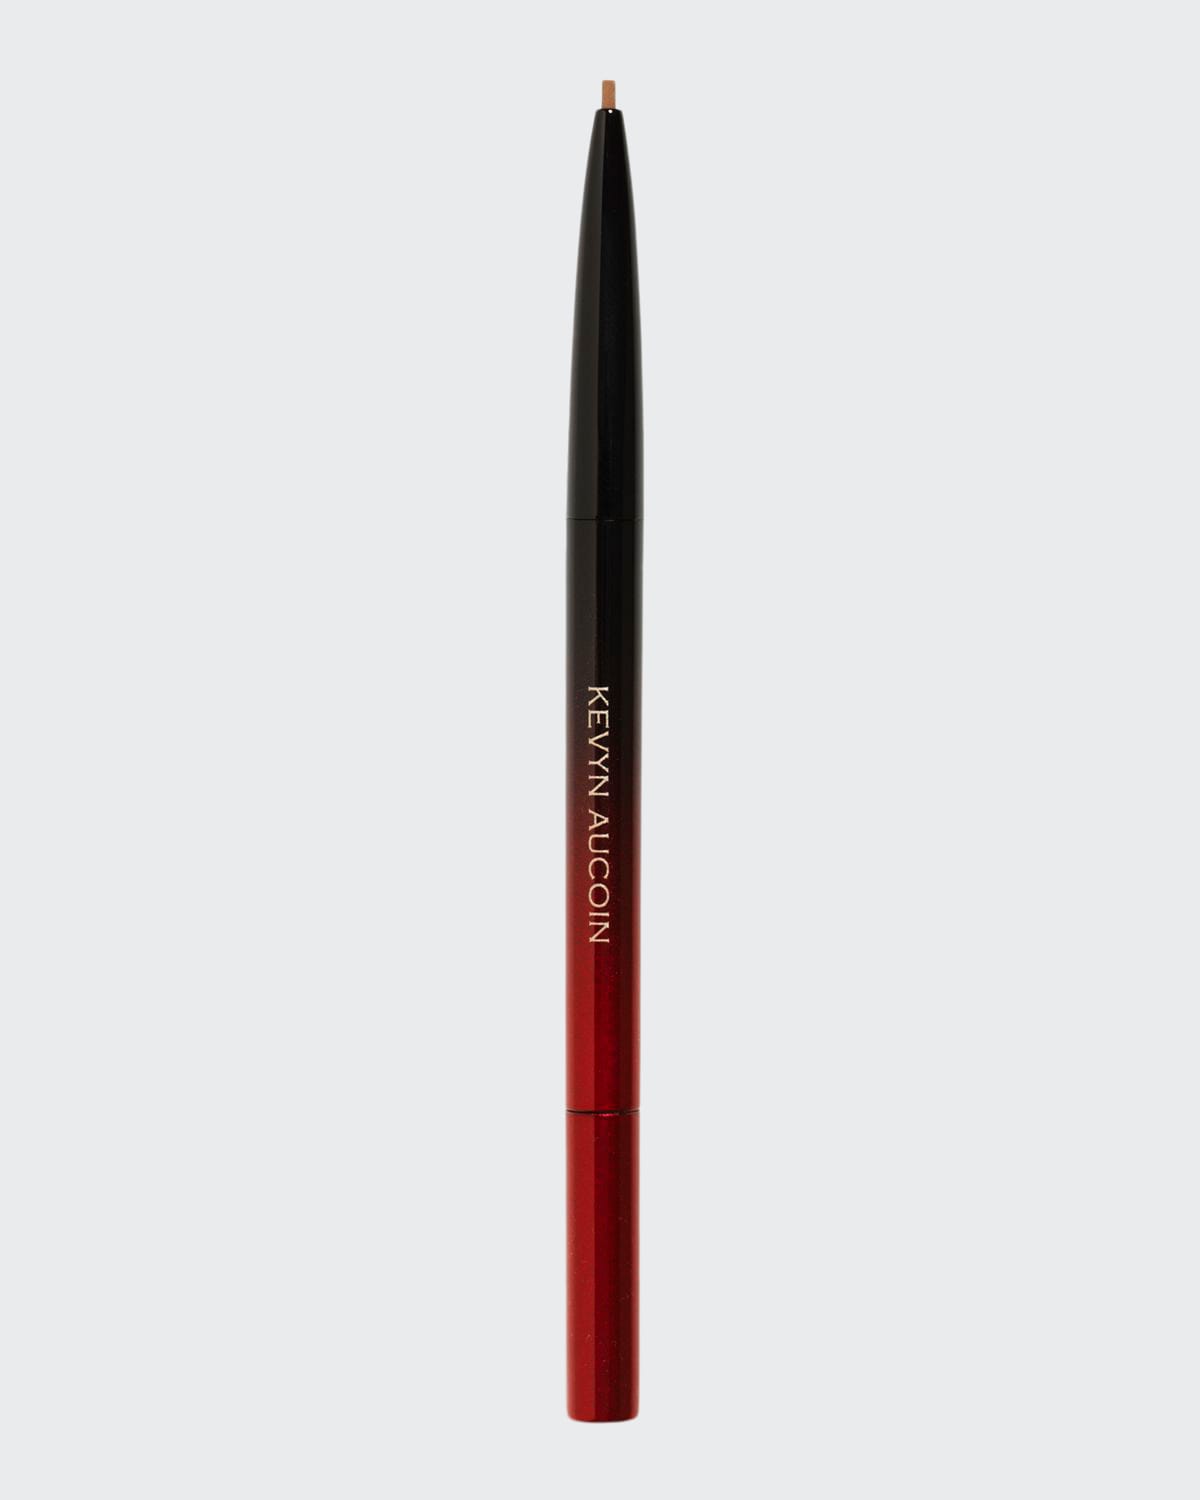 Kevyn Aucoin The Precision Brow Pencil